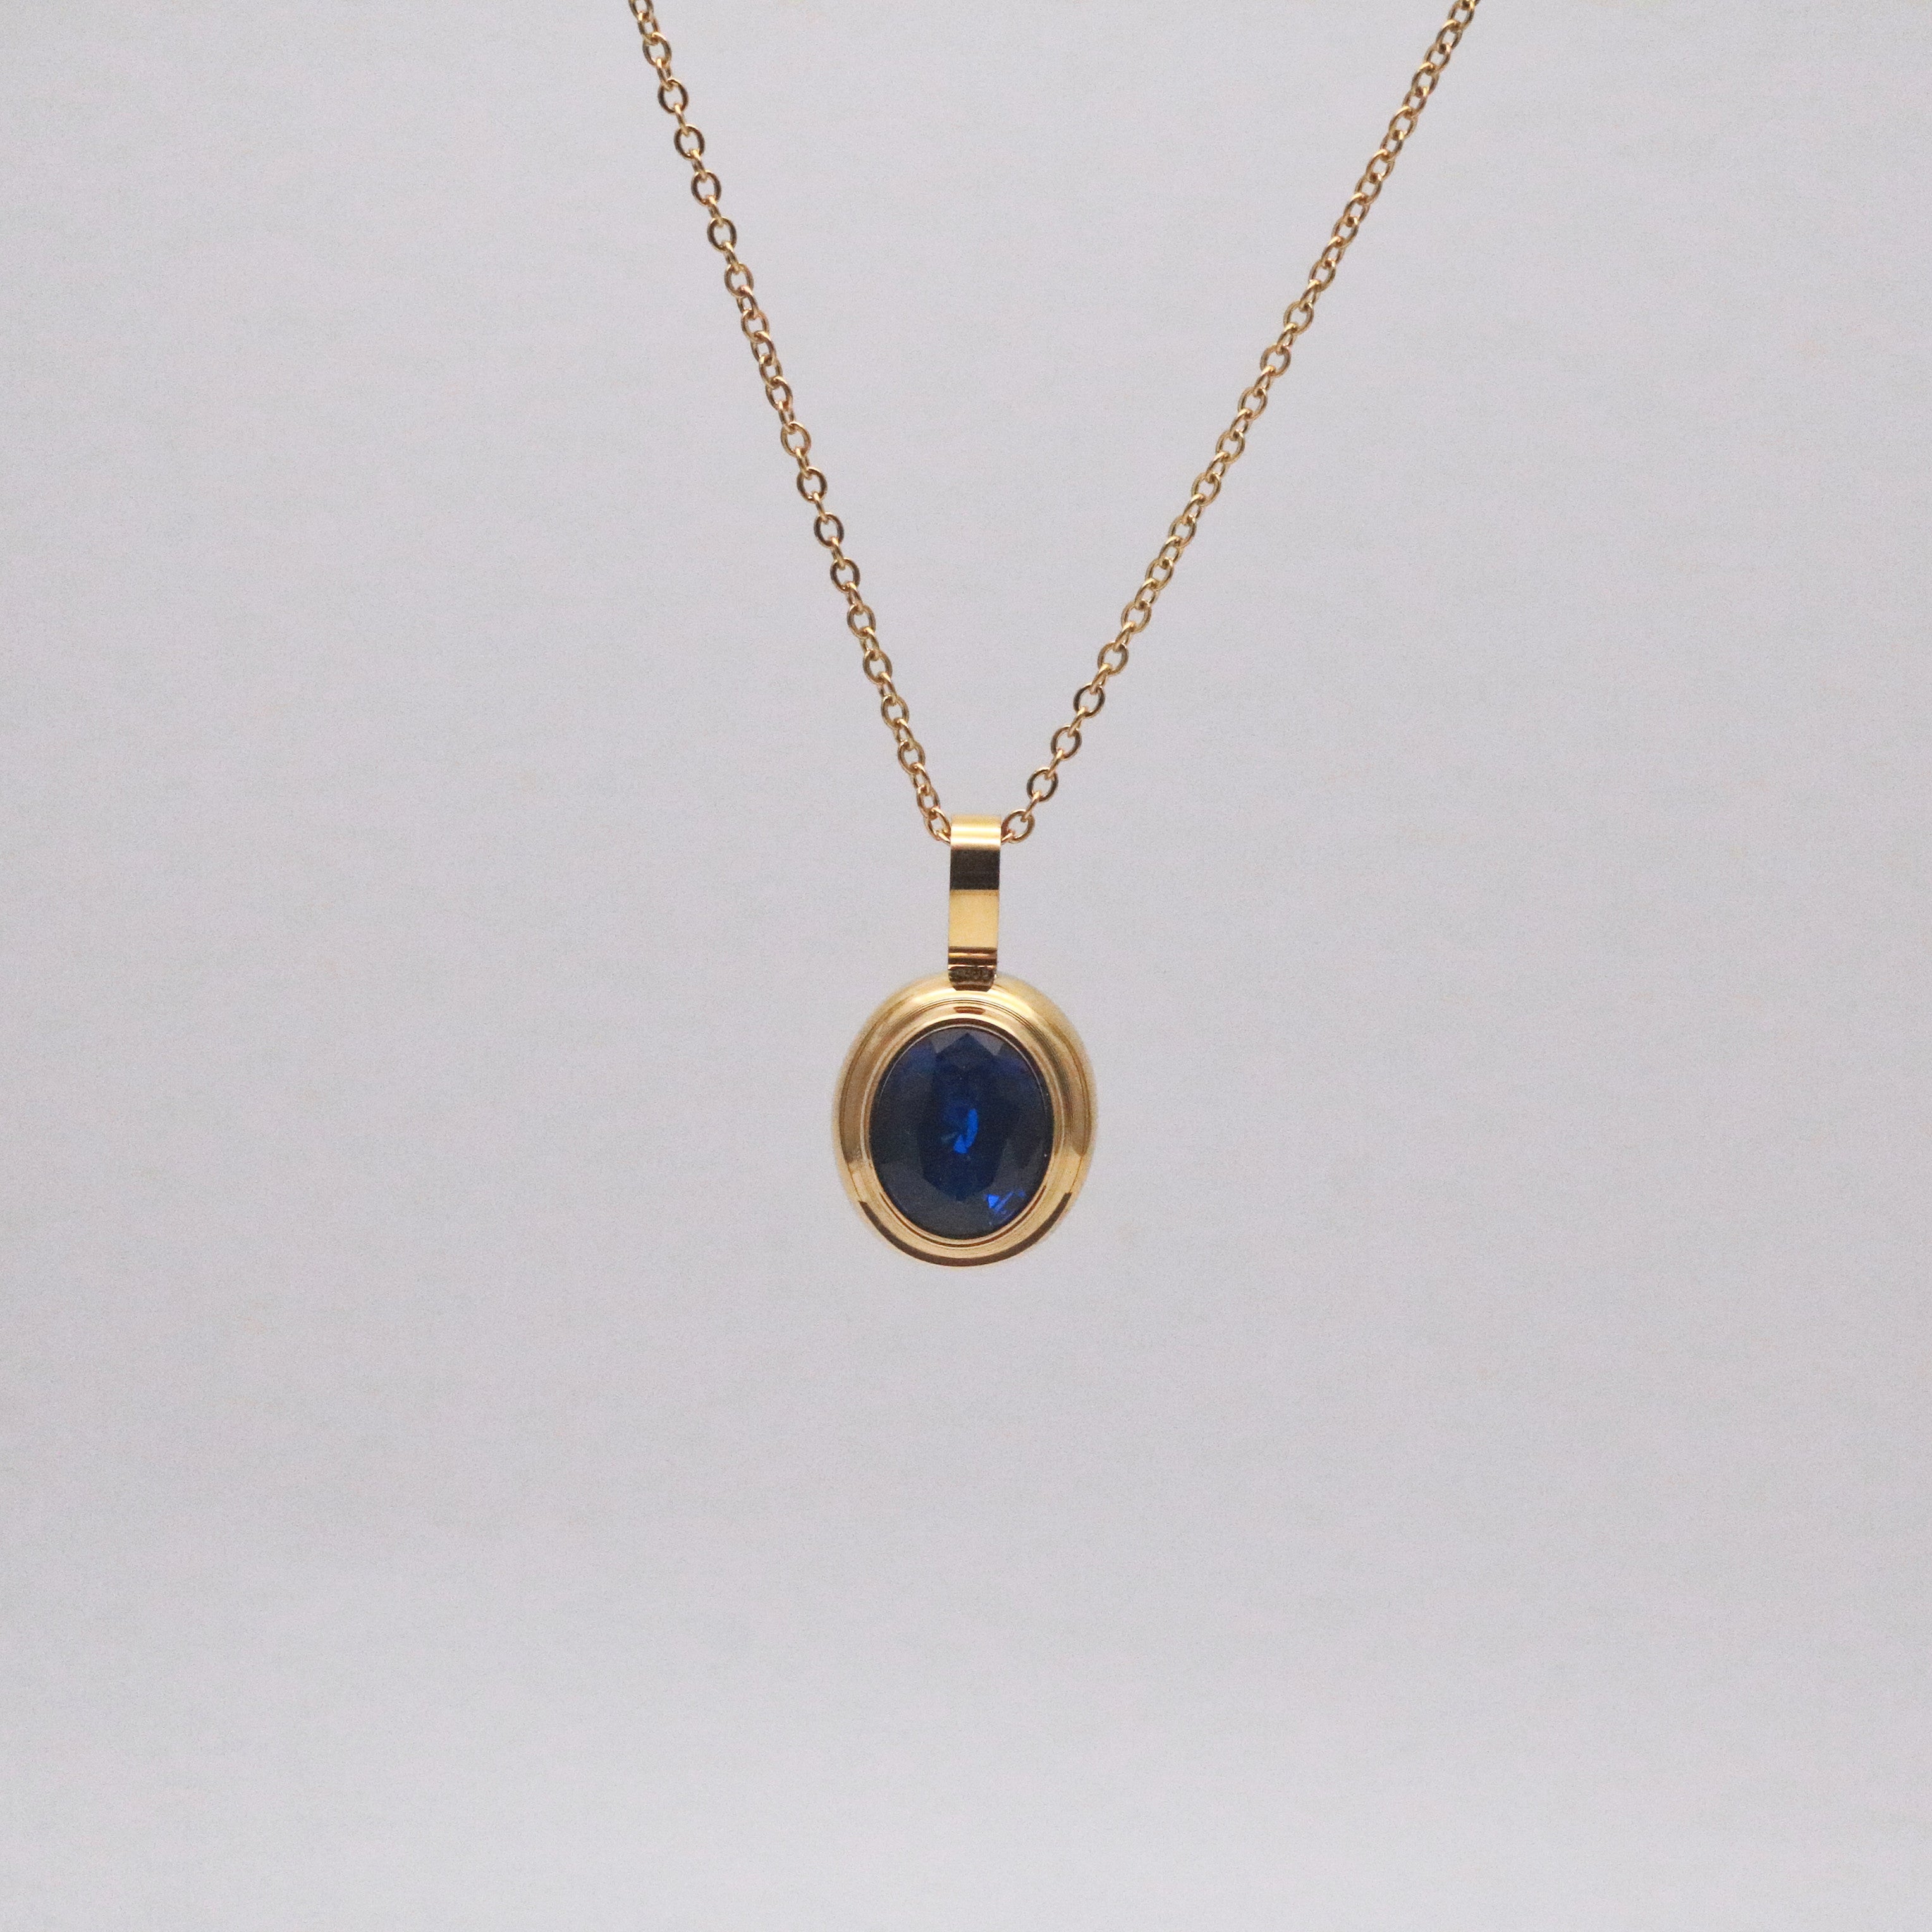 Meideya jewelry blue gemstone pendant necklace